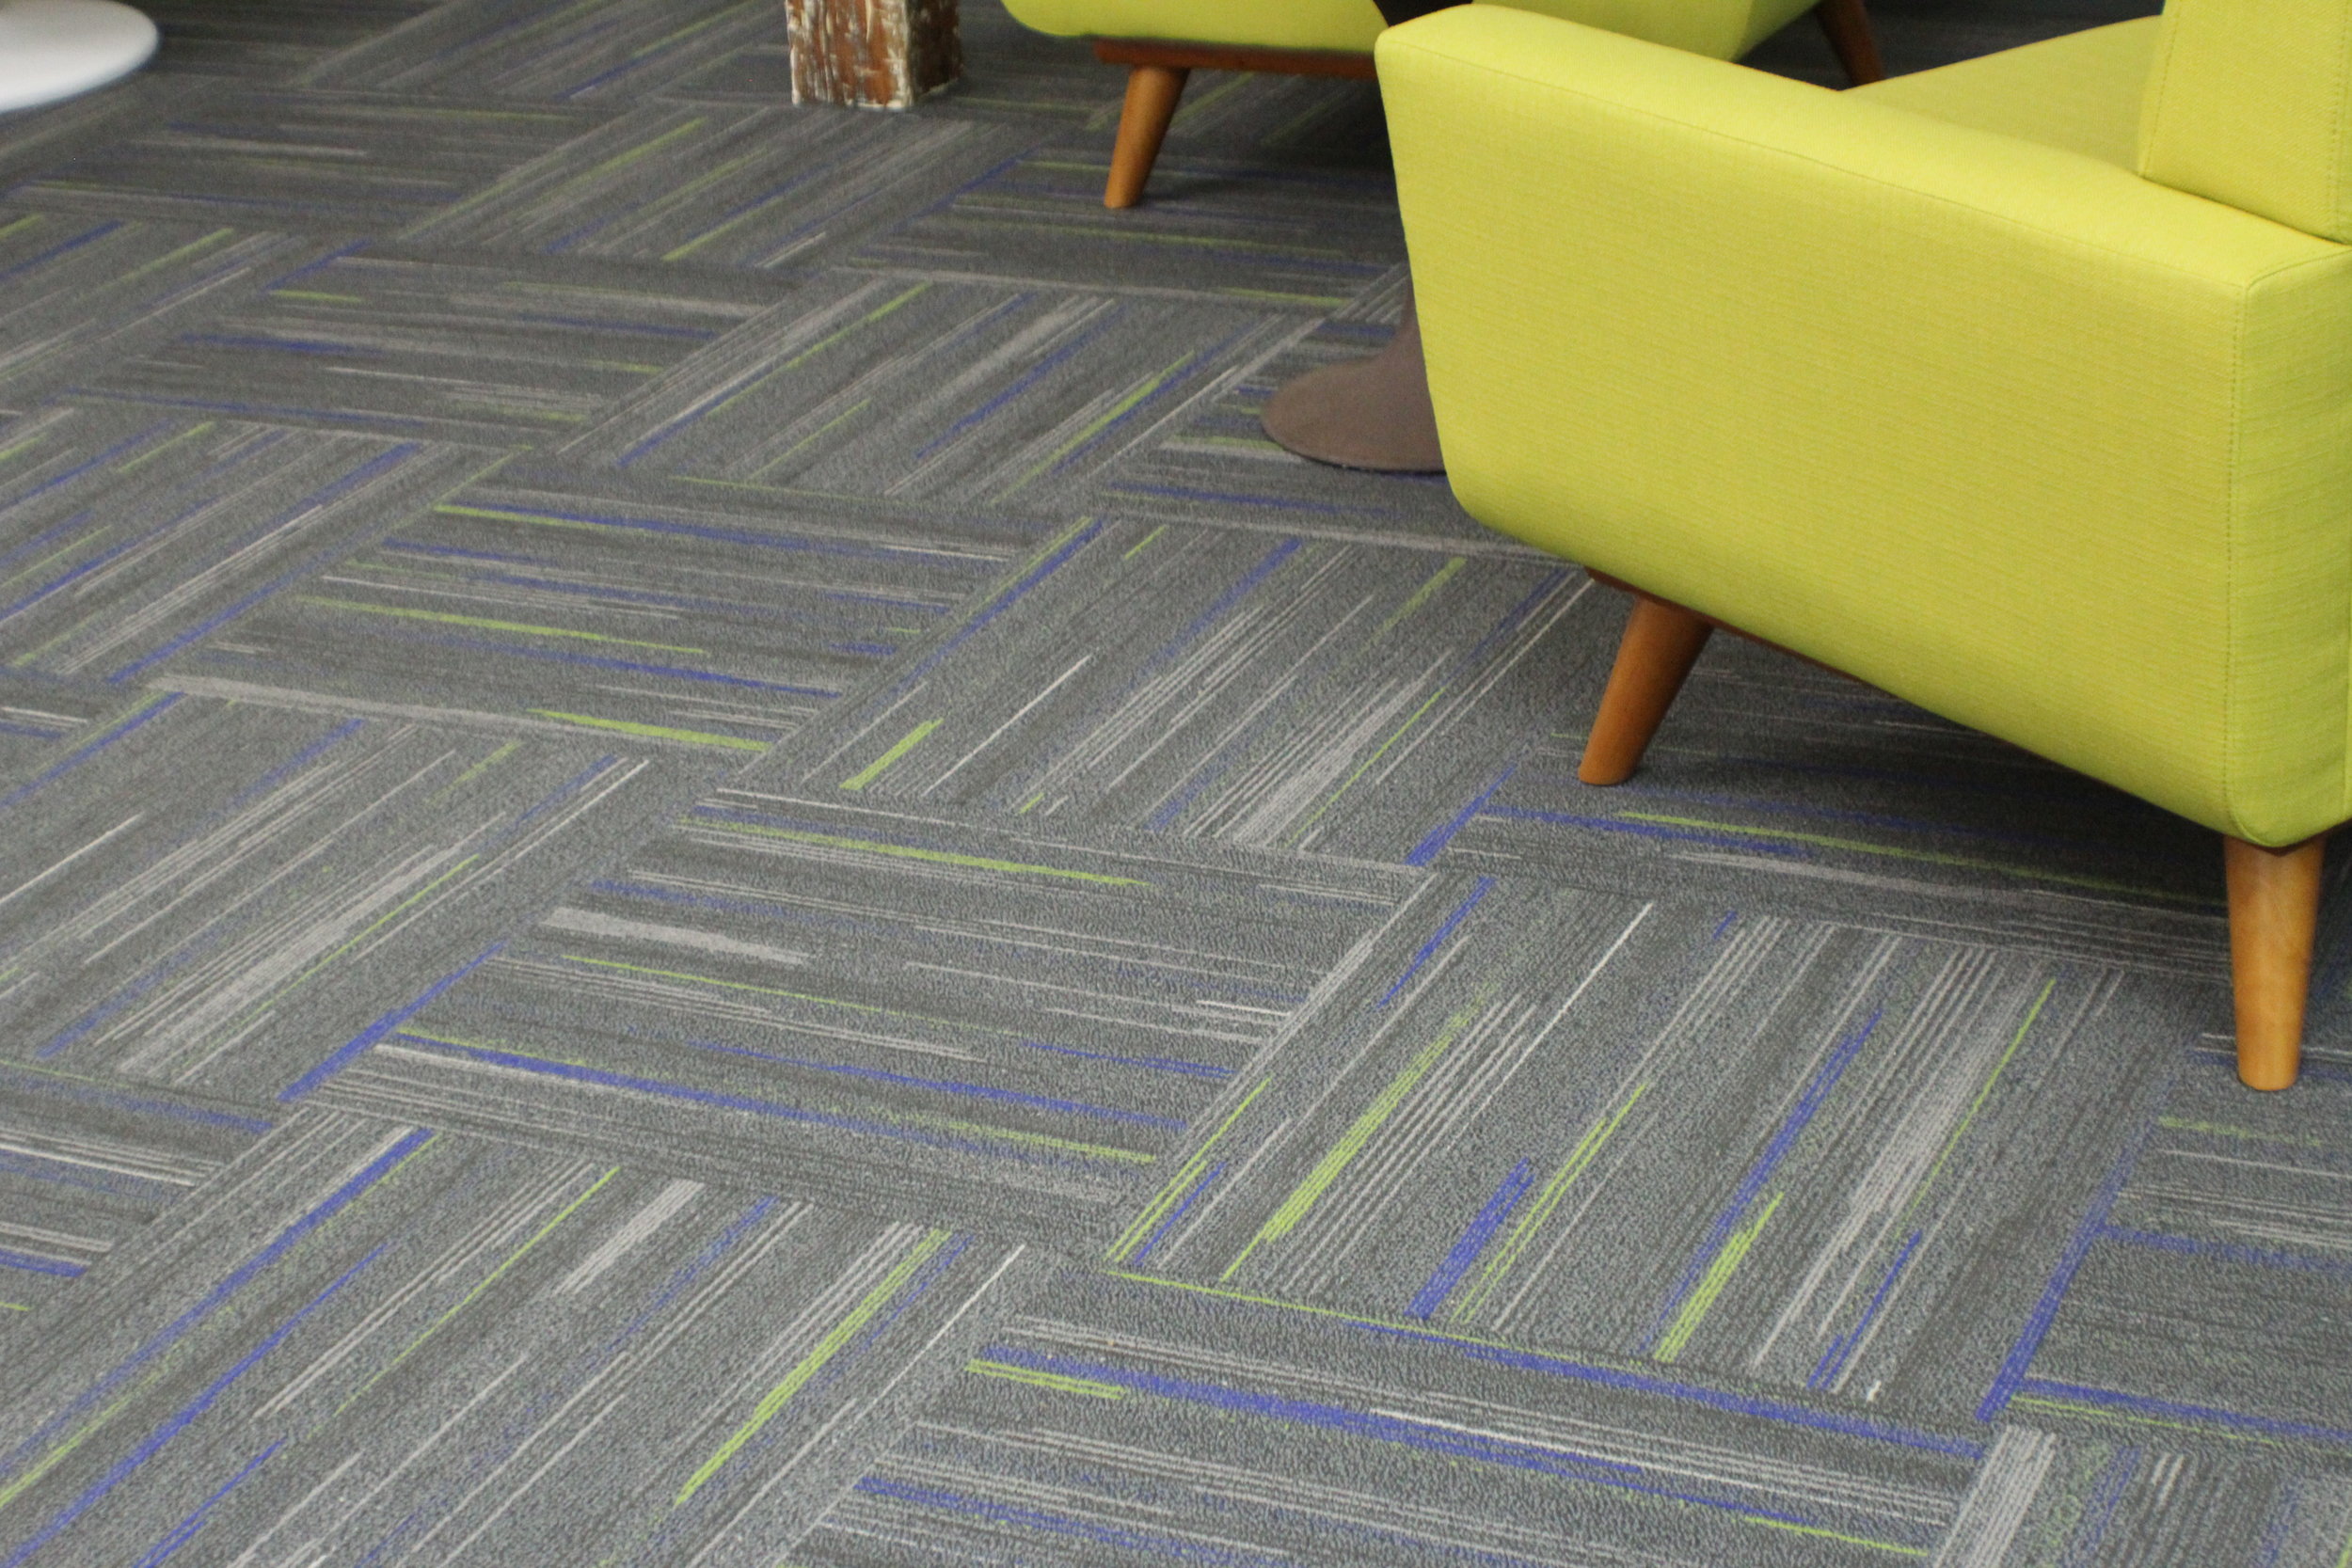 Ebsco Publishing x Atkinson Carpet & Flooring